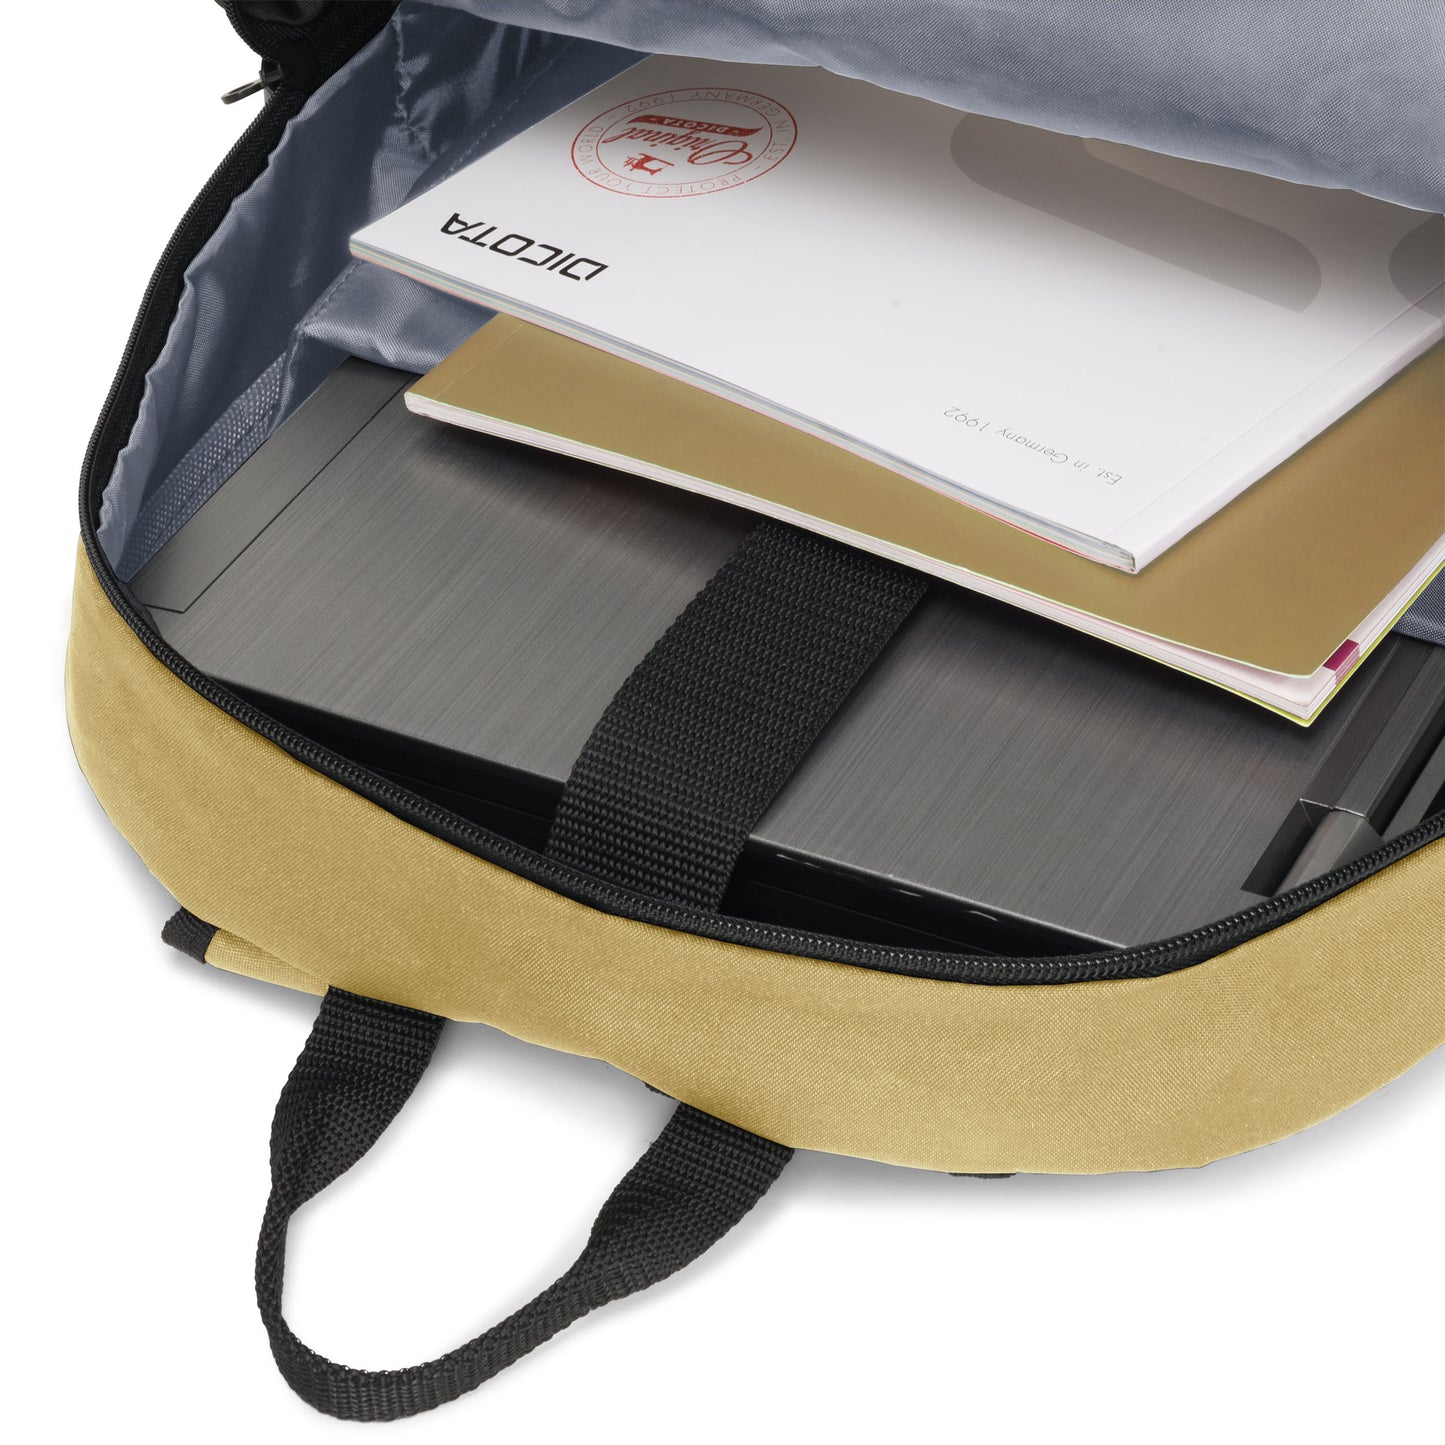 Laptop Backpack B2 15.6" Camel Brown